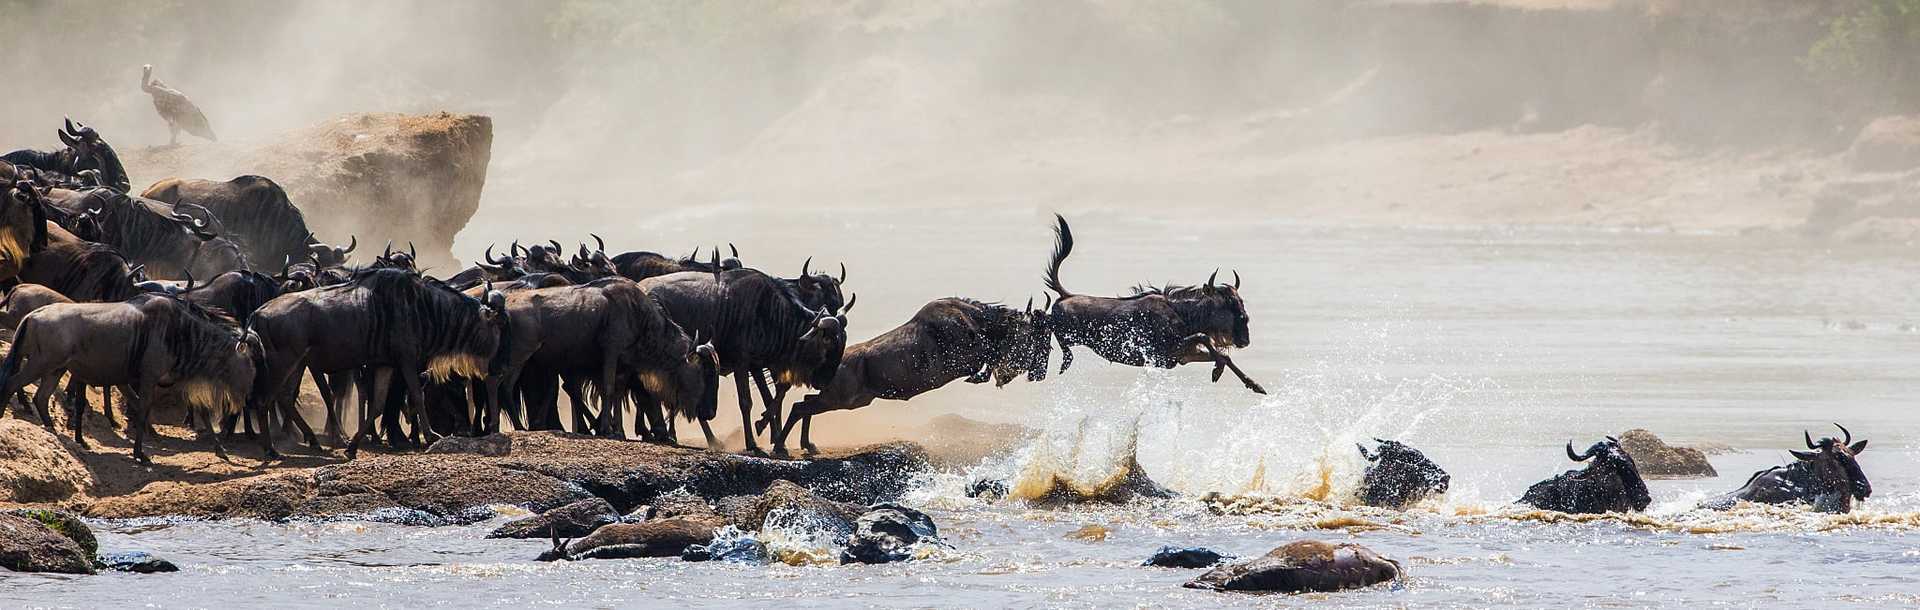 Wildebeest jumping into Mara River in Kenya